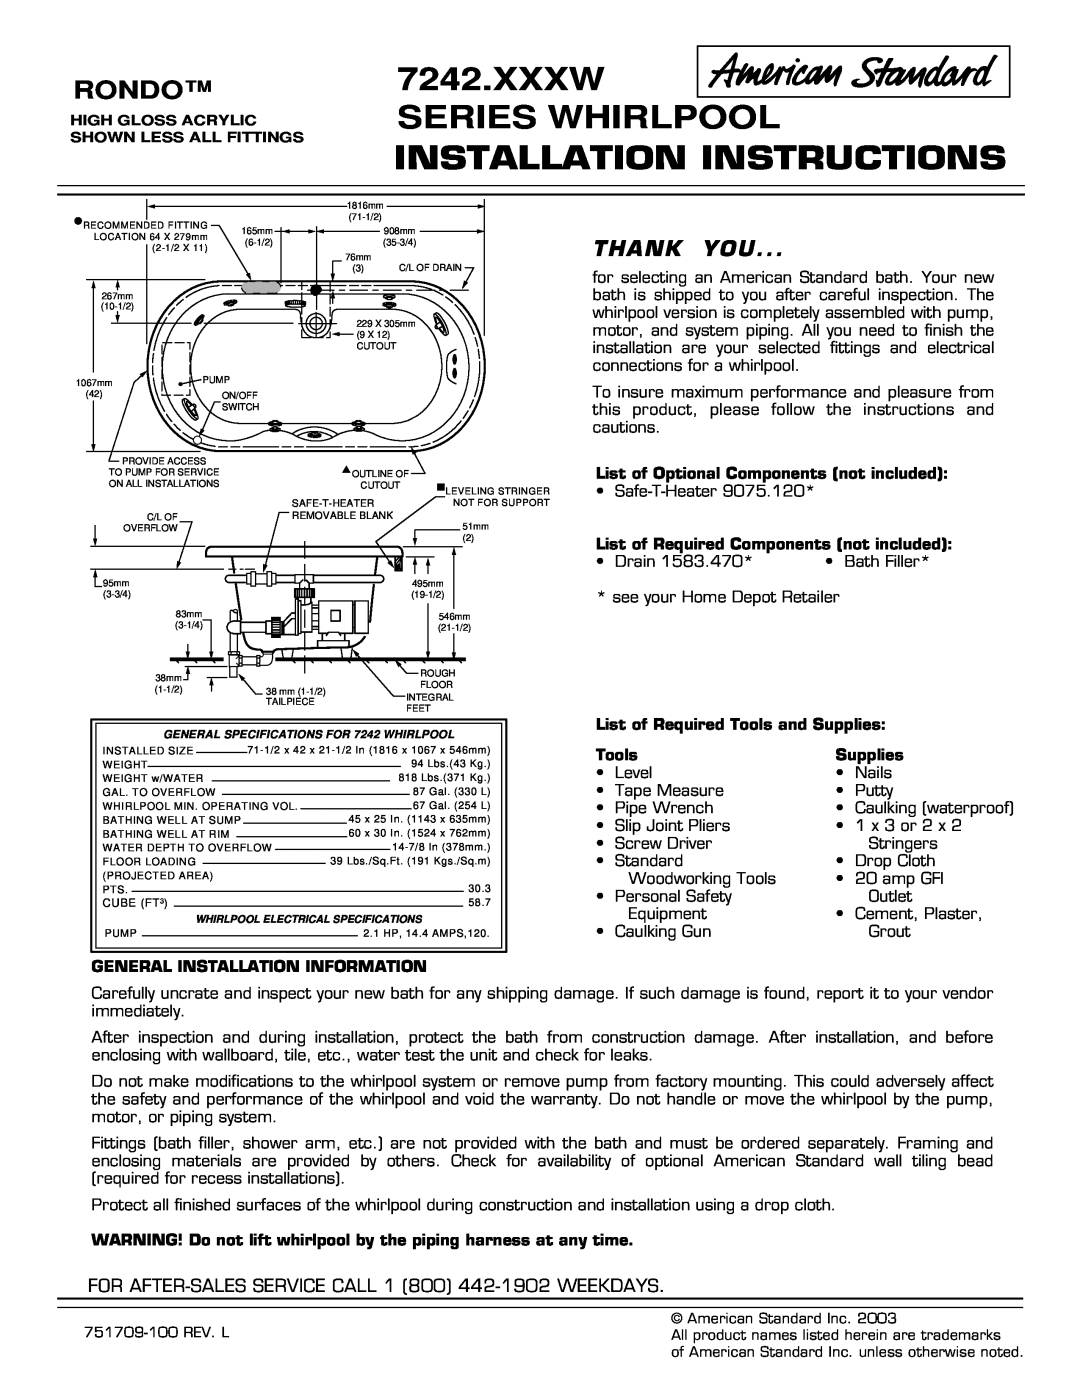 American Standard 7242.XXXW installation instructions Xxxw Series Whirlpool, Installation Instructions, Rondo, Thank You 